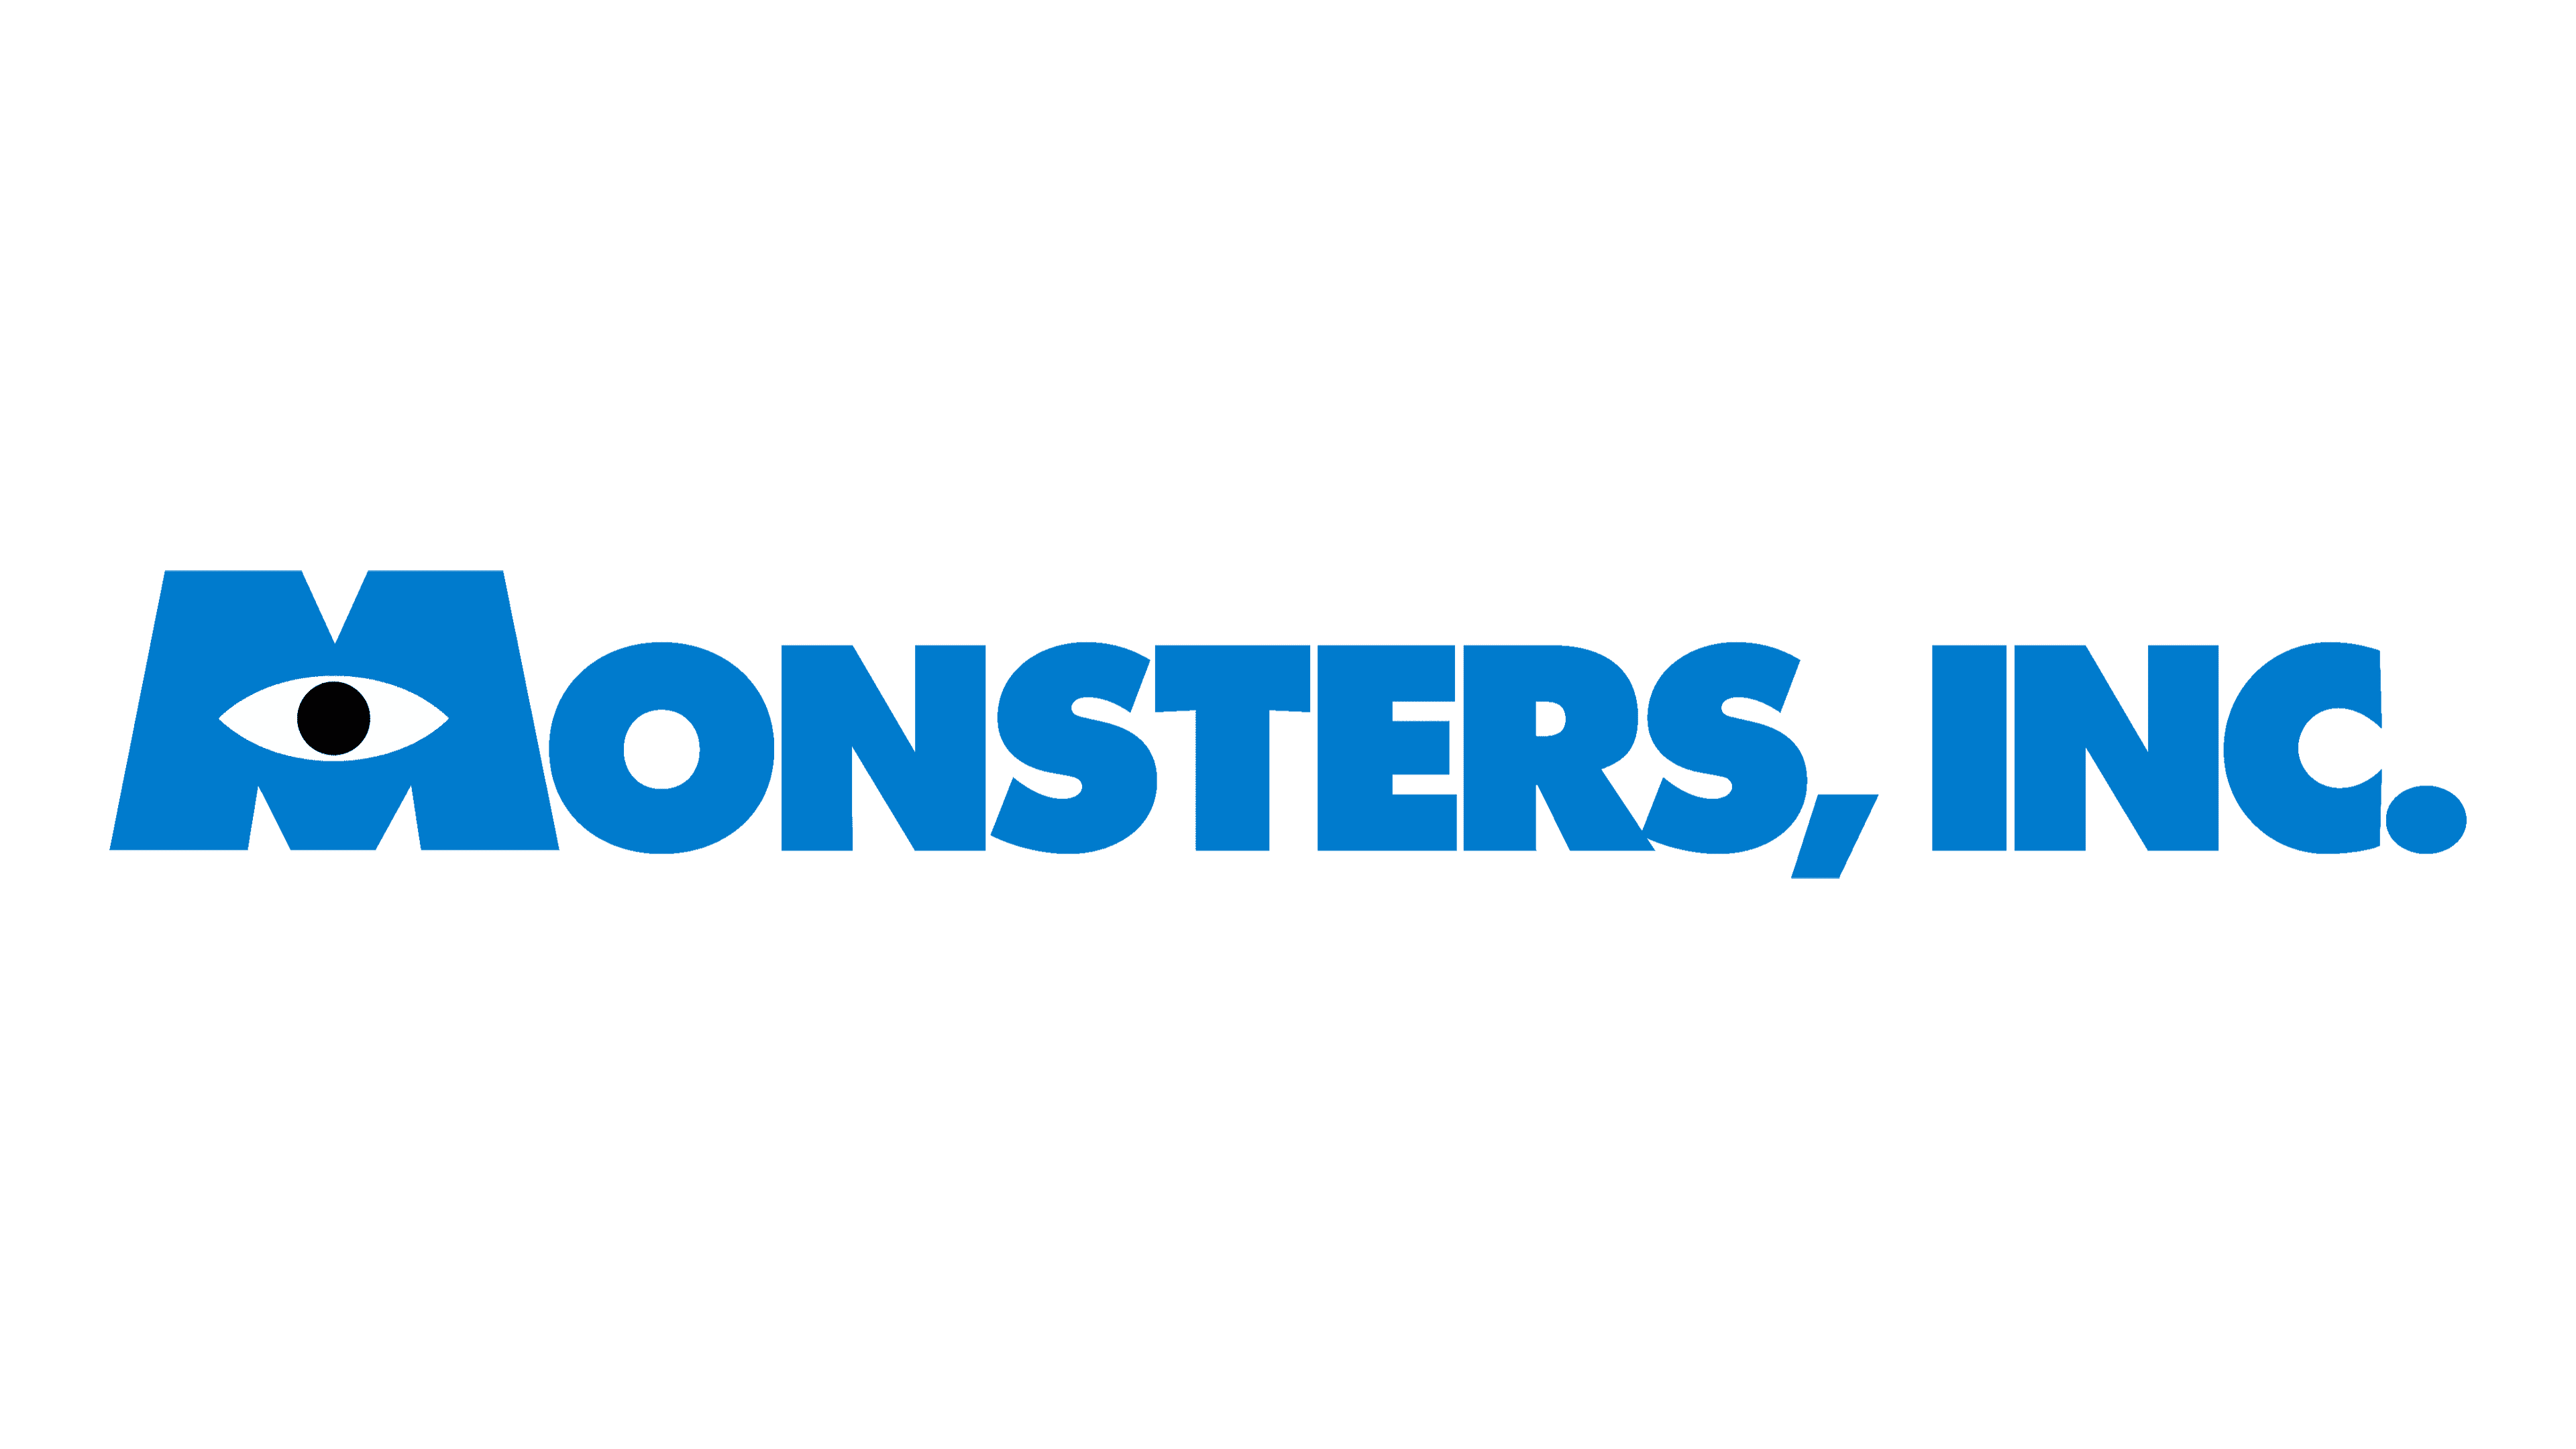 Download Monsters Inc Logo Png Transparent Monsters Inc Png Image